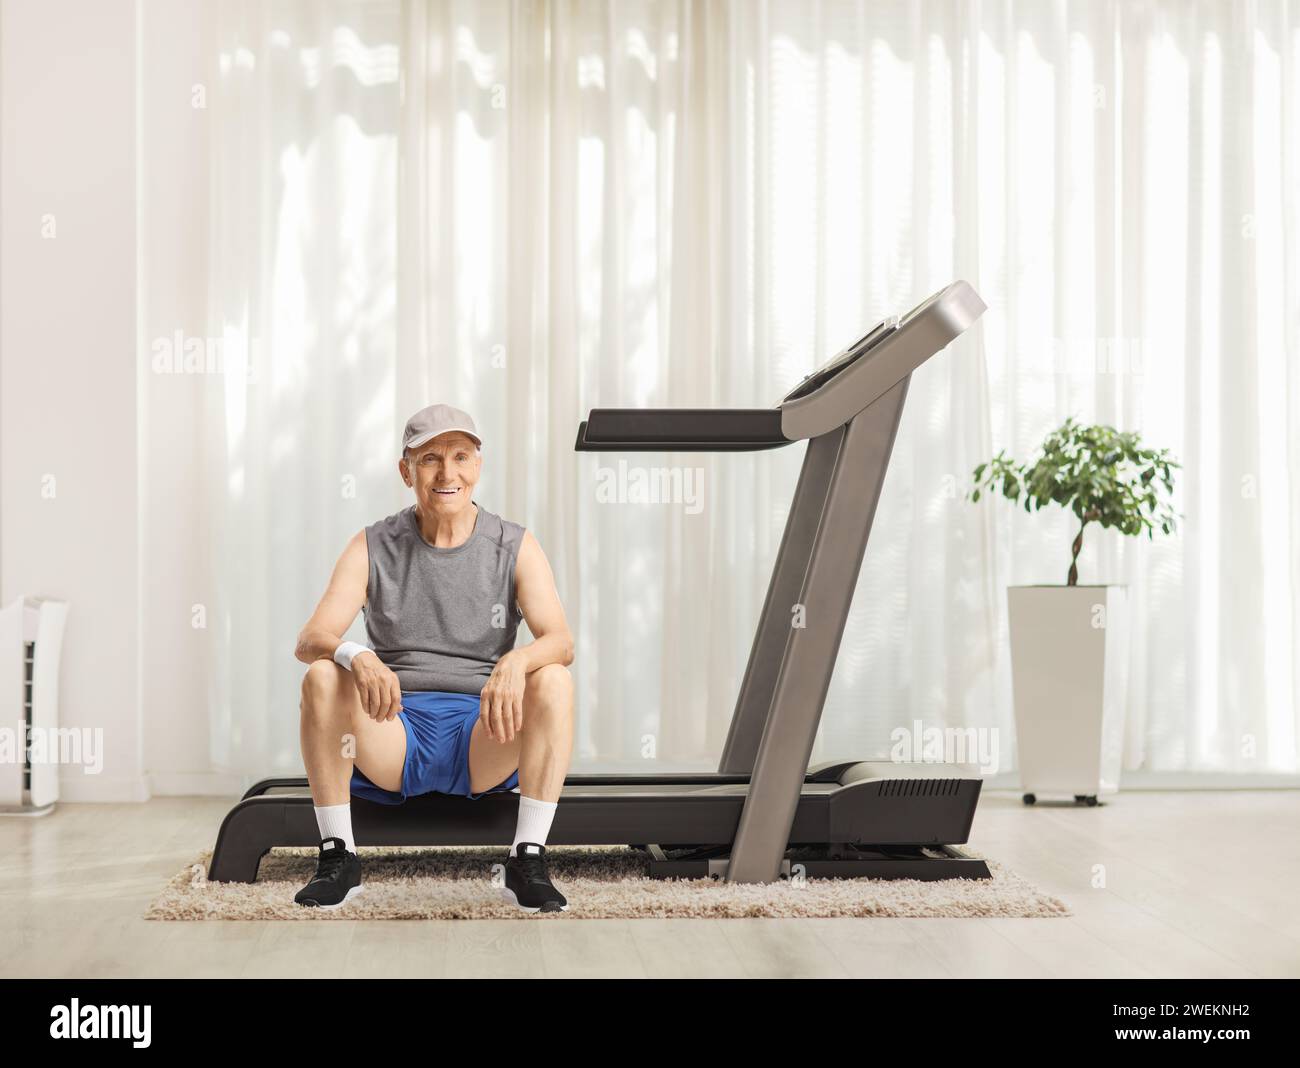 Elderly man sitting on a treadmill at home Stock Photo